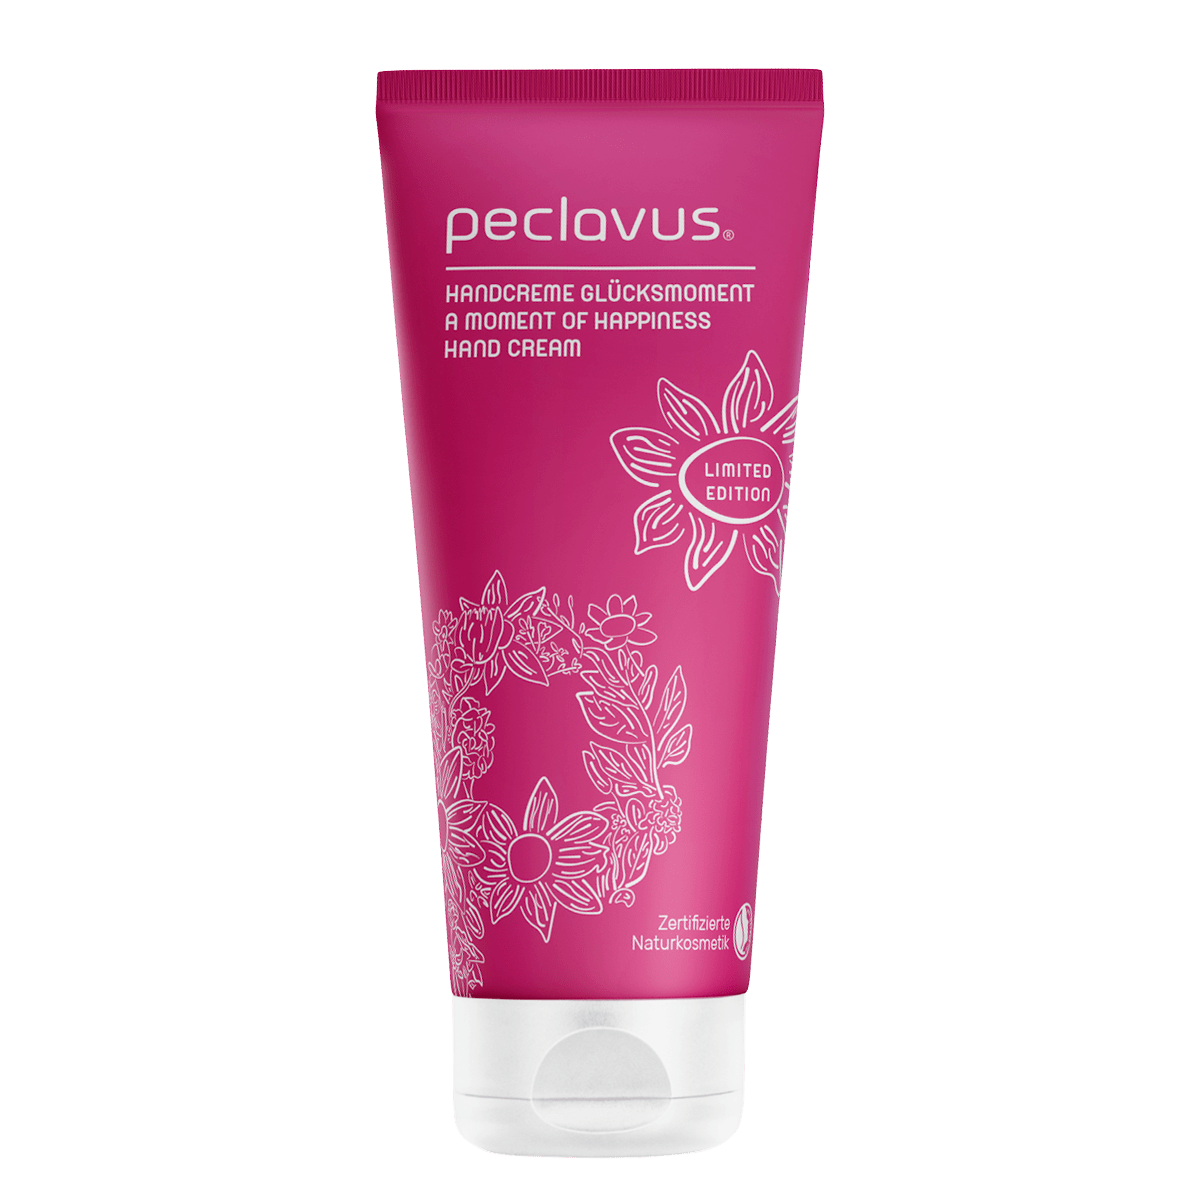 peclavus - Handcreme Glücksmoment, 100 ml